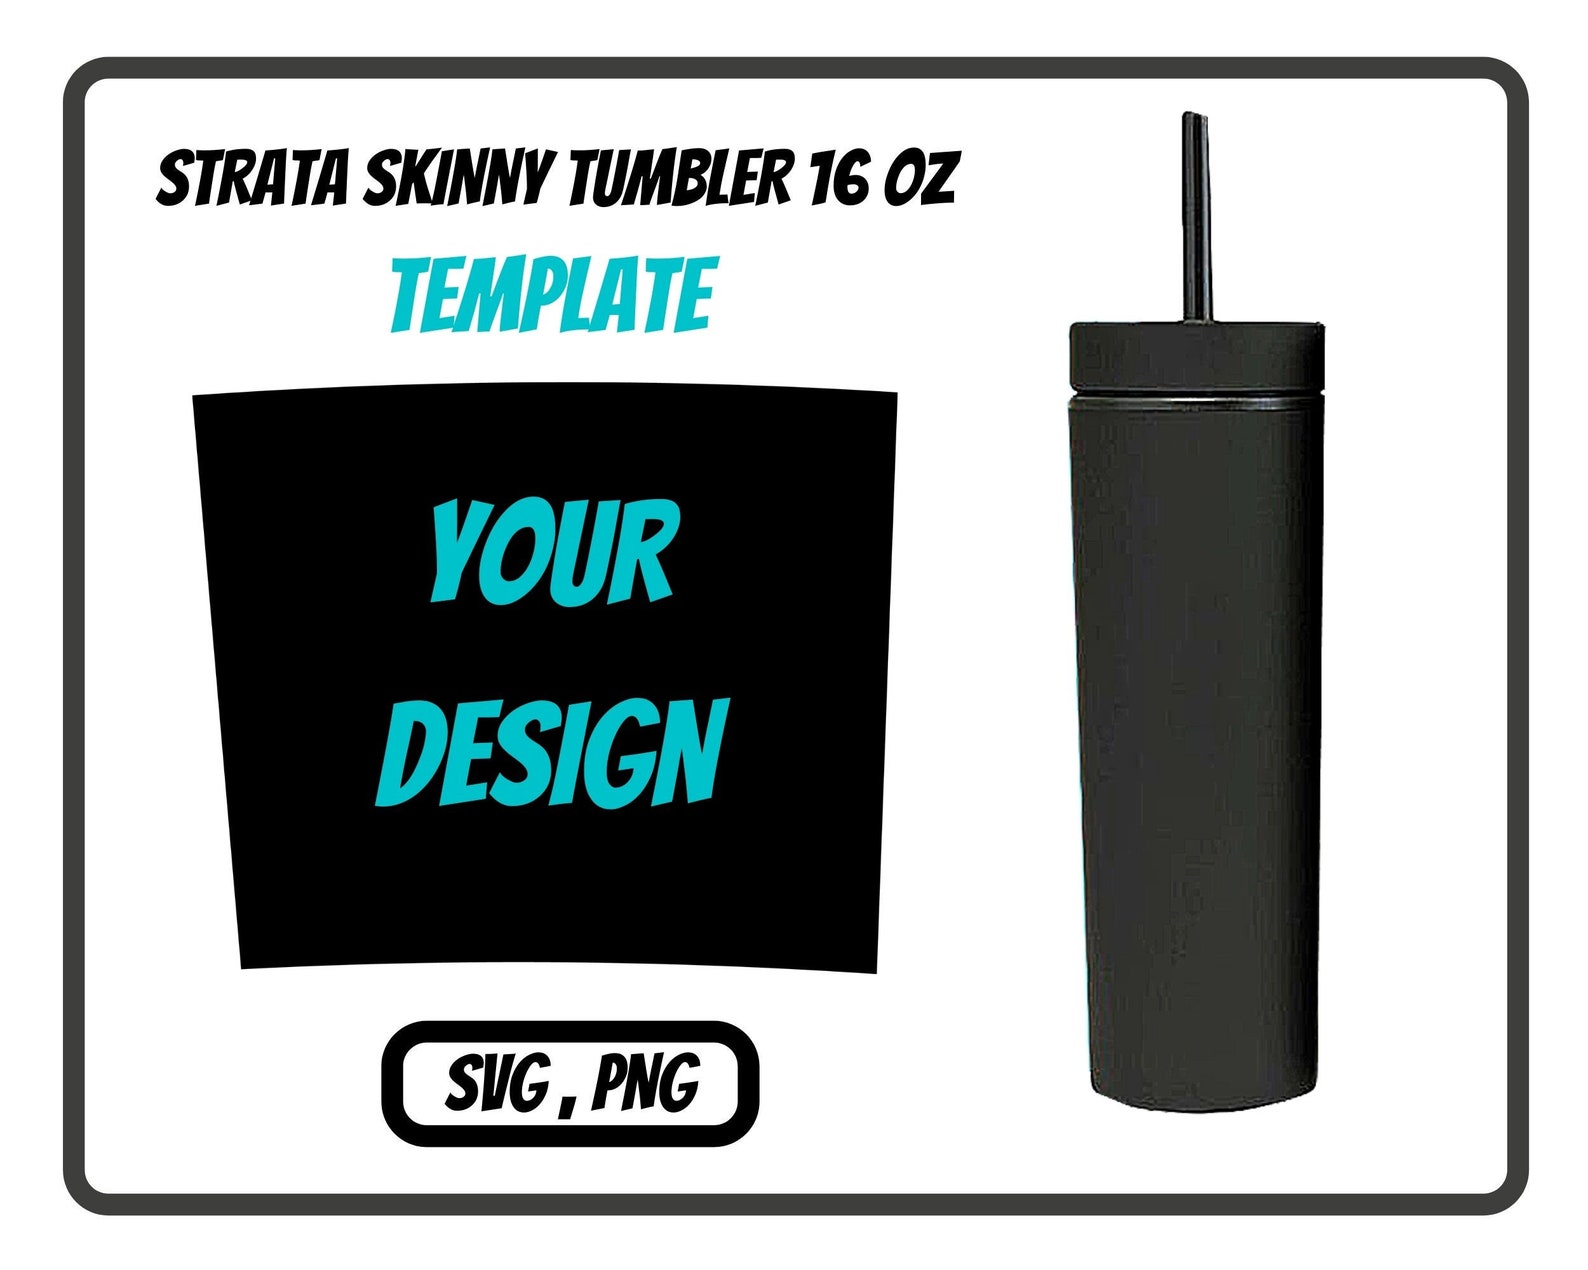 16oz-strata-skinny-tumbler-template-svg-png-files-16-oz-etsy